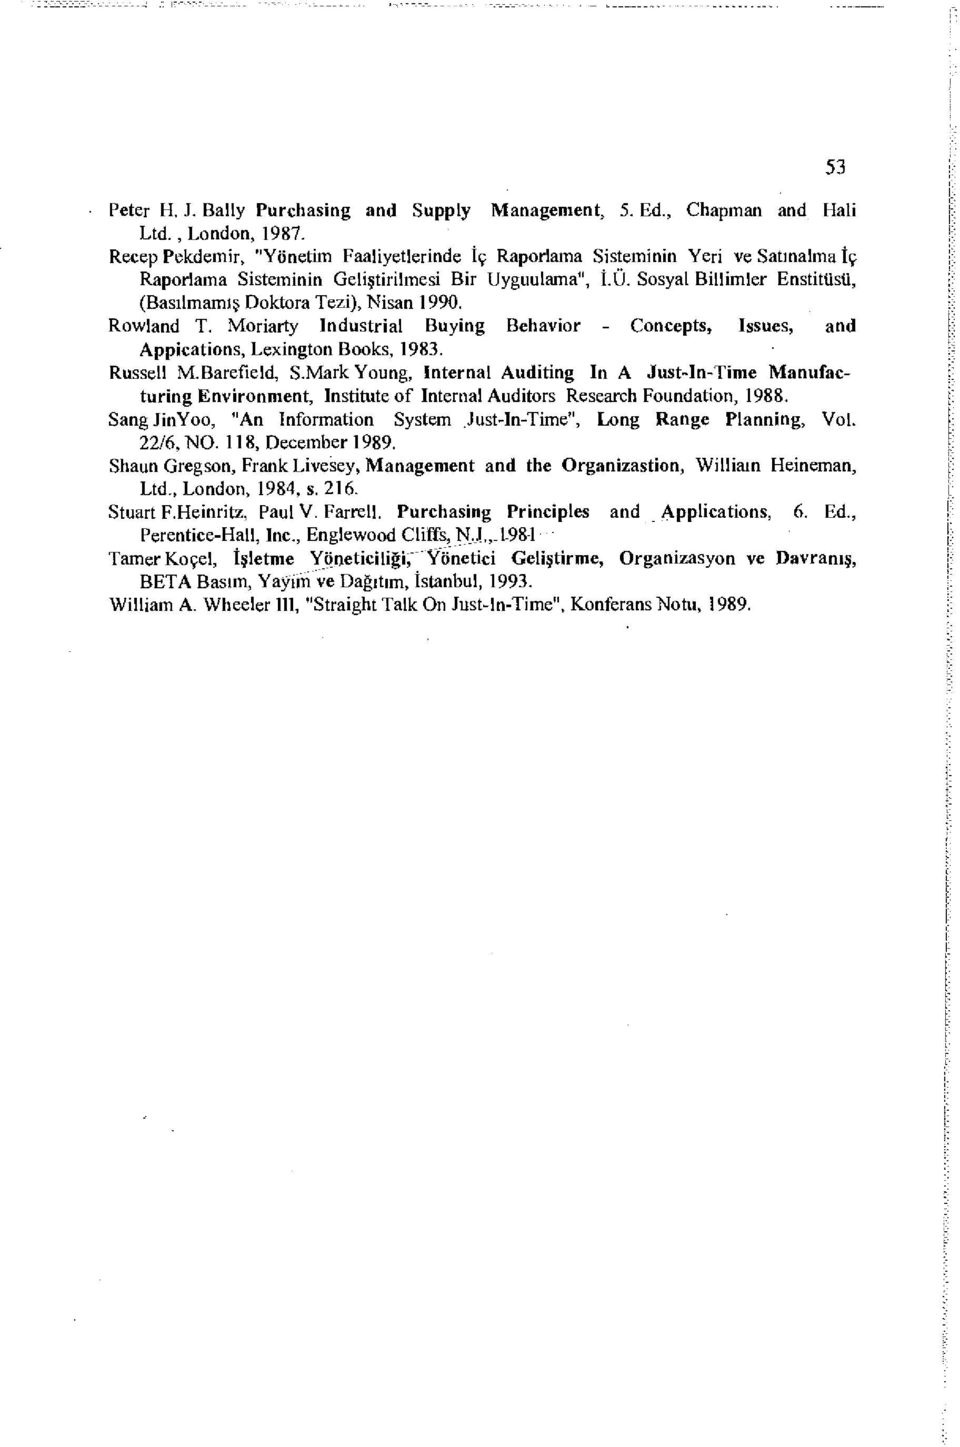 Sosyal Billimler Enstitüsü, (Basılmamış Doktora Tezi), Nisan 1990. Rowland T. Moriarty Industrial Buying Behavior - Concepts, Issues, and Appications, Lexington Books, 1983. Russell M.Barefield, S.